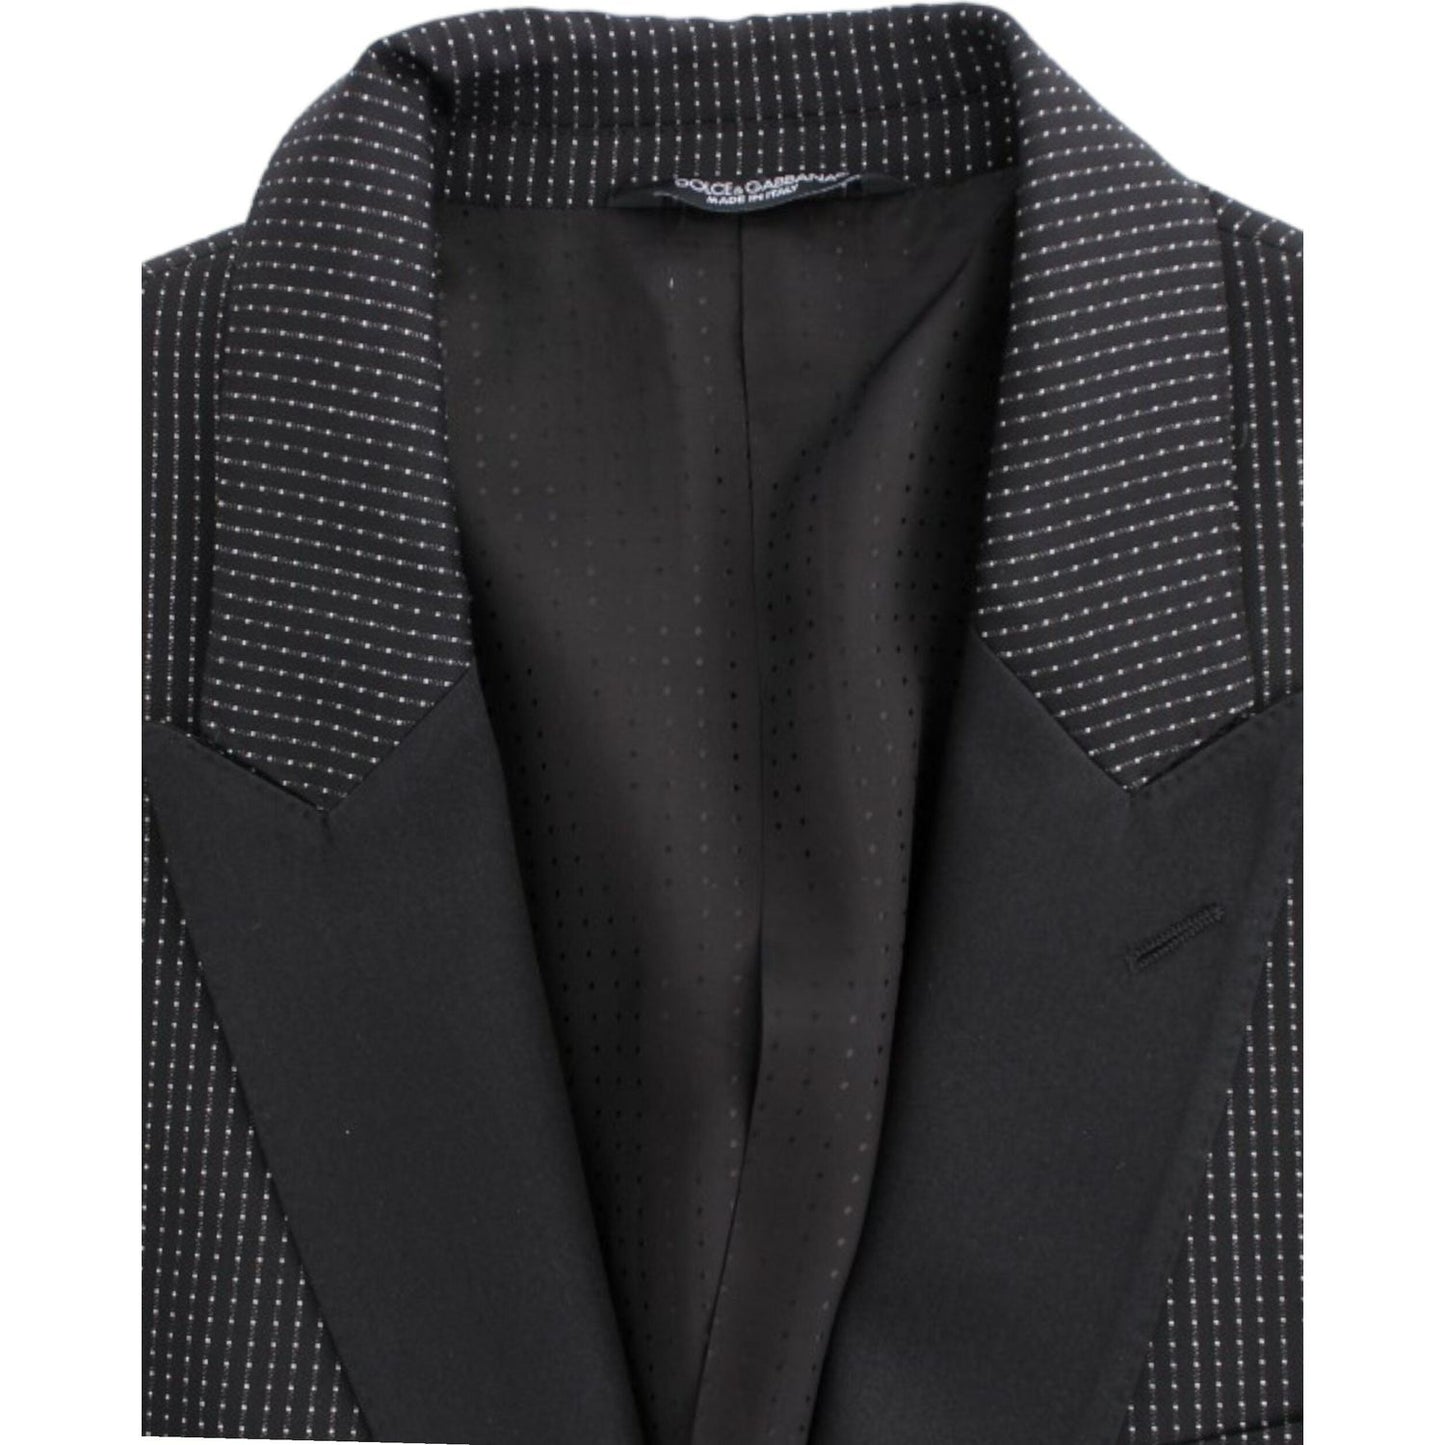 Dolce & GabbanaElegant Black Polka Dotted Slim Fit BlazerMcRichard Designer Brands£589.00